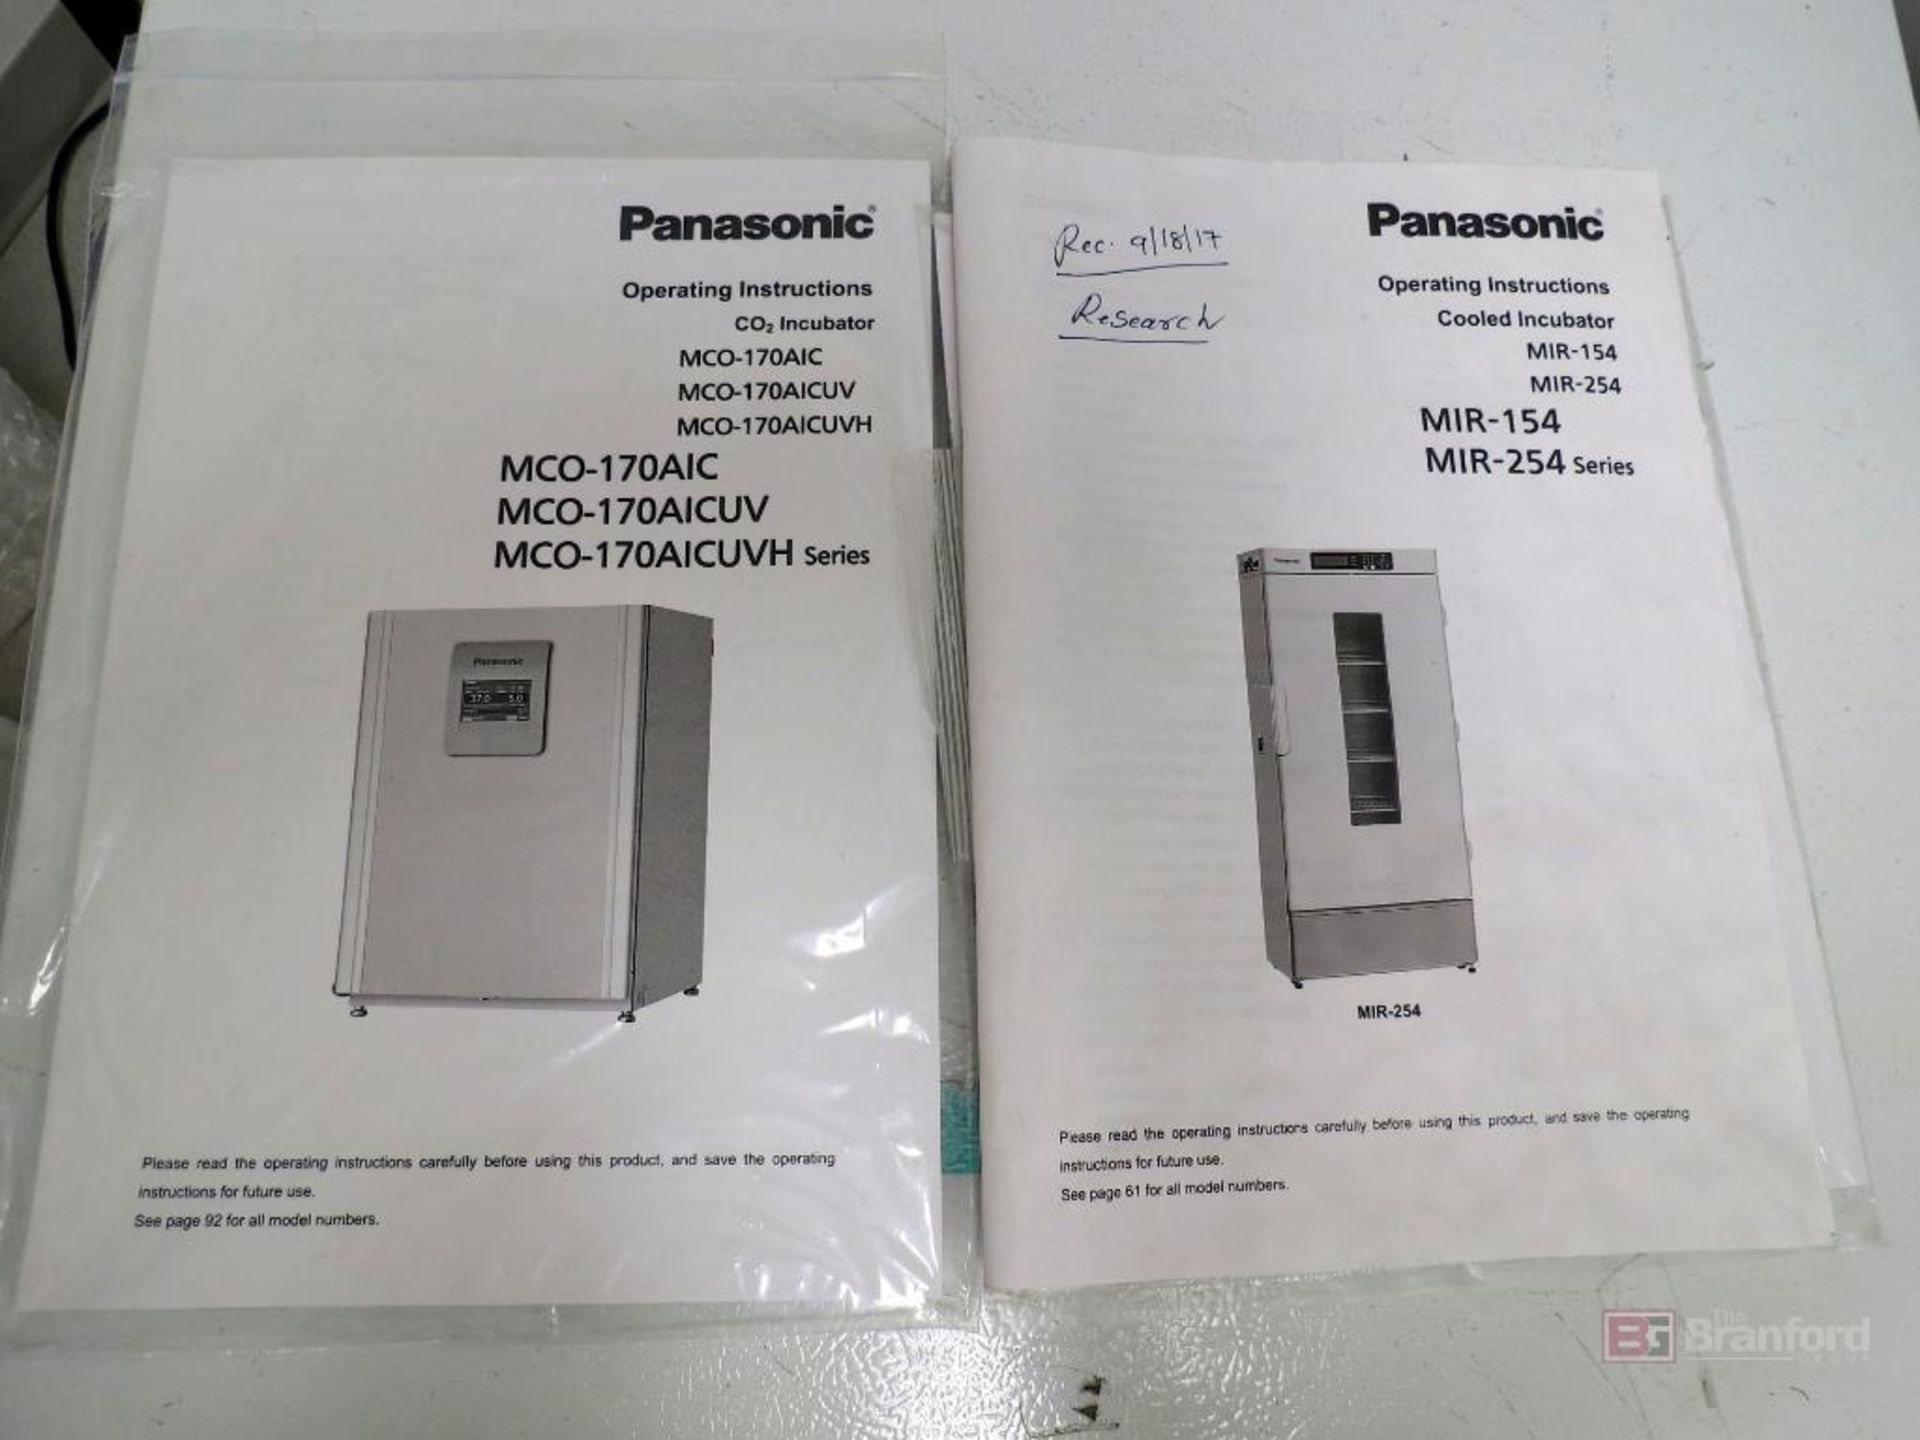 Panasonic MIR-254-PA Refrigerated Incubator - Image 4 of 6